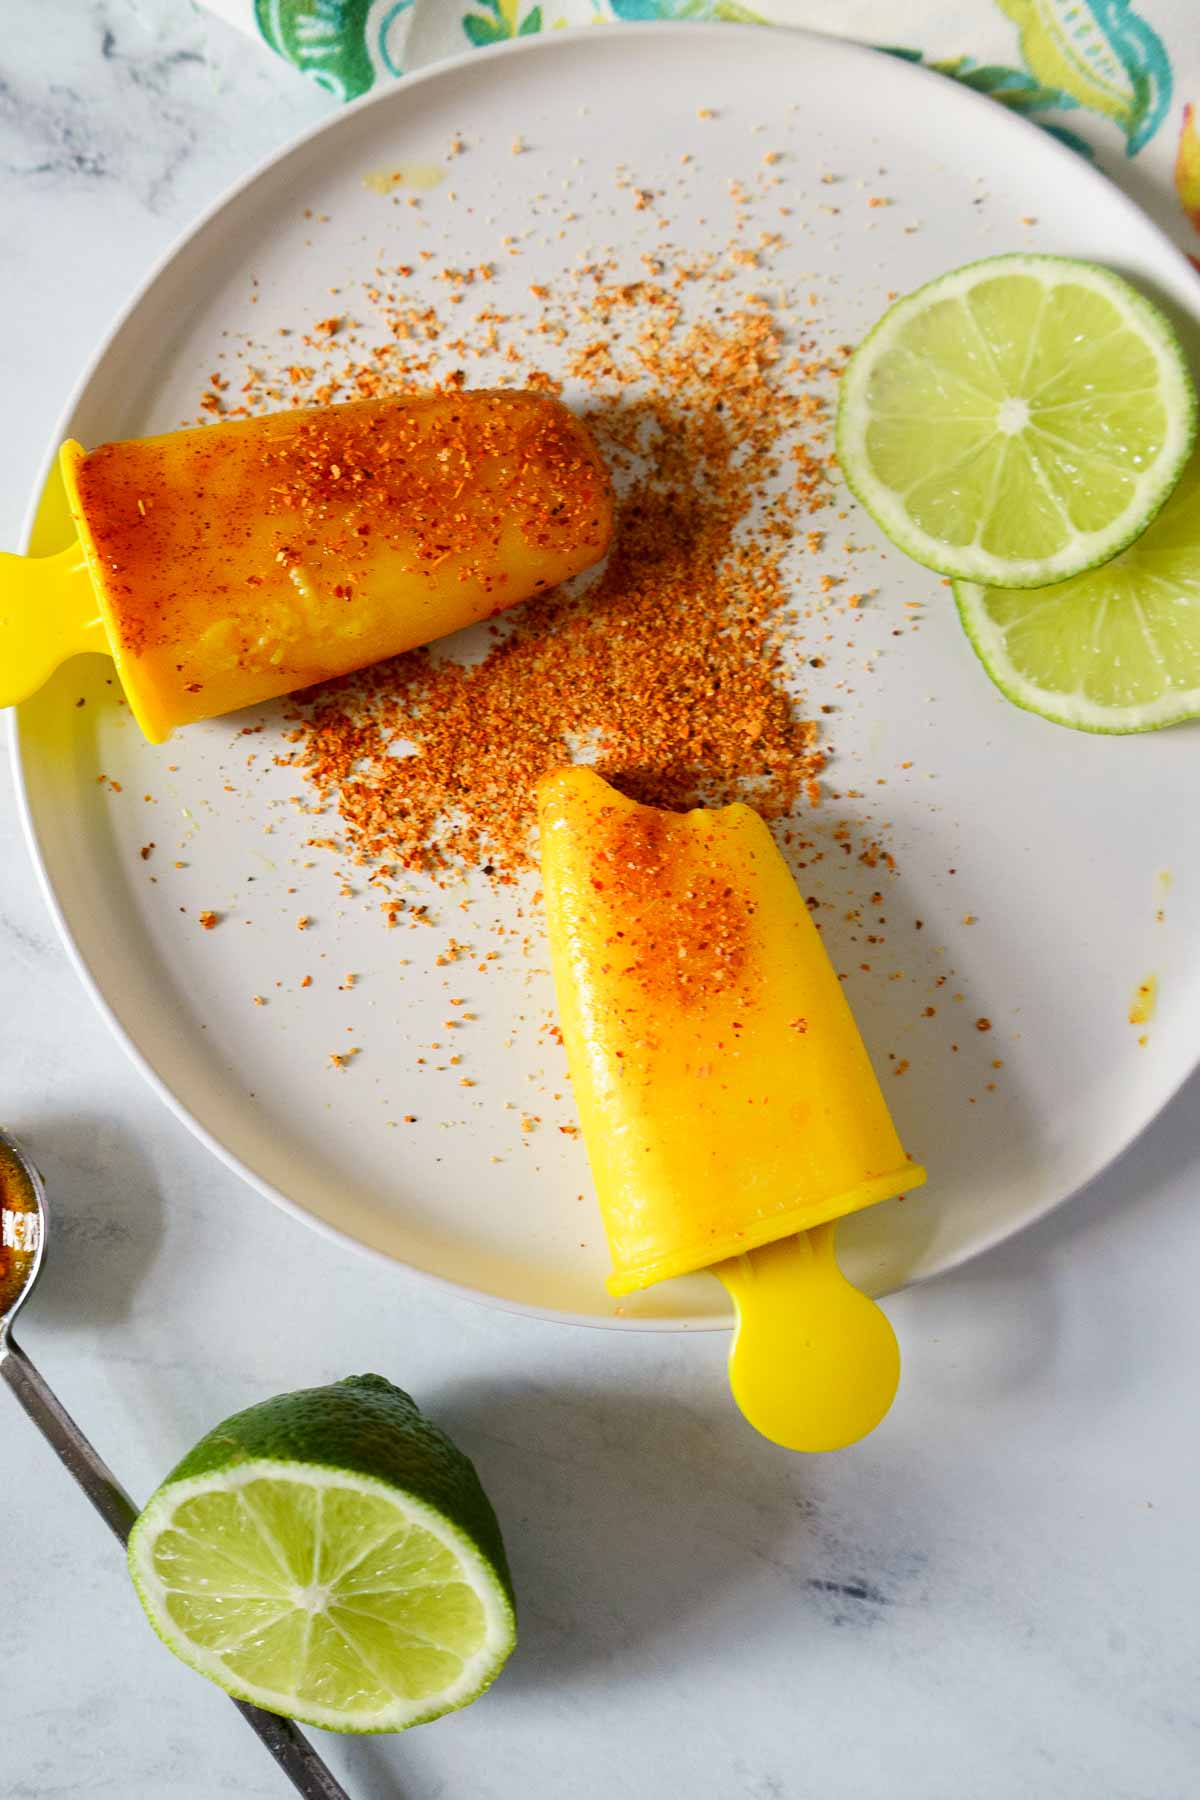 sprinkling mango popsicles with tajin seasoning. 